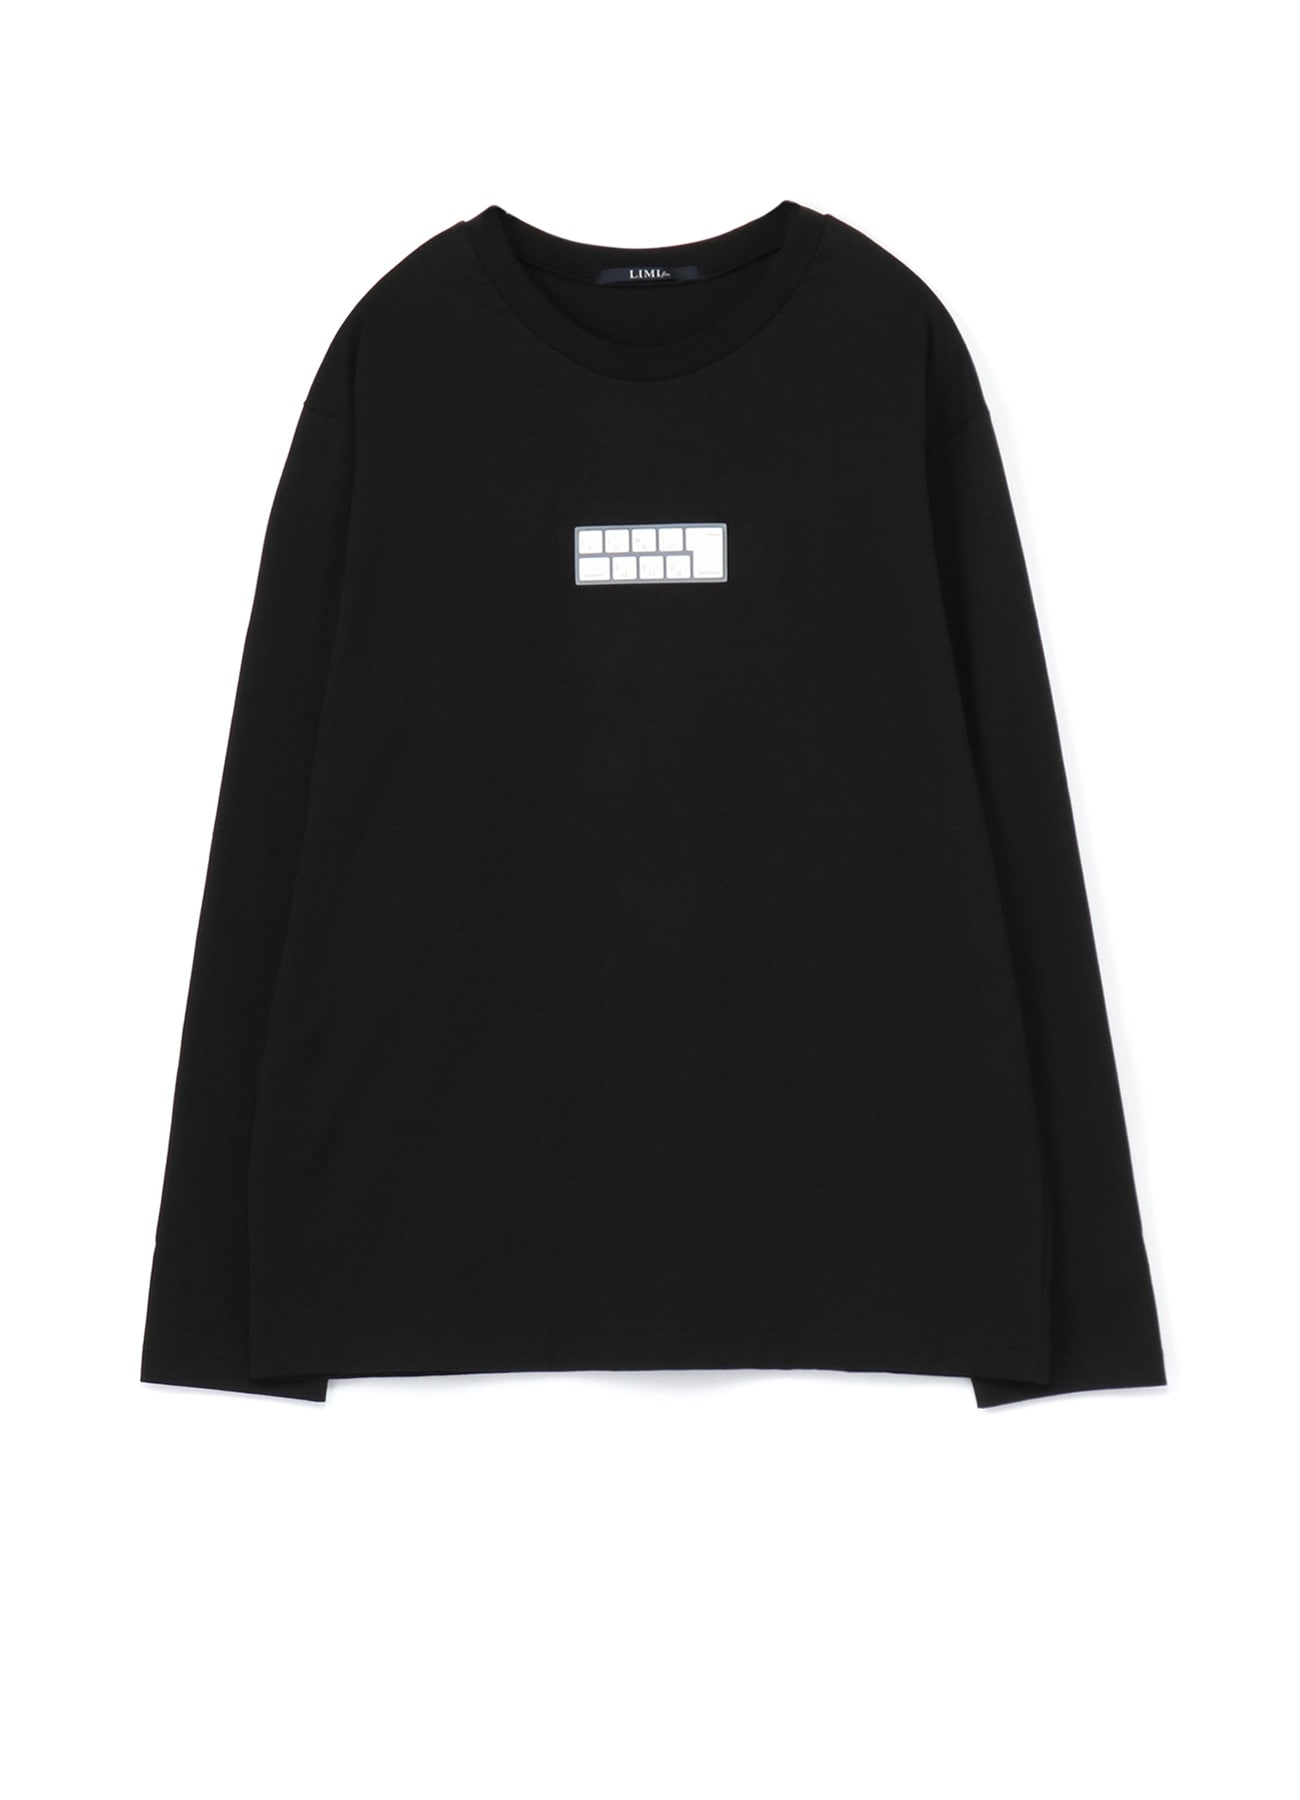 Silicon KeyBoard Oversized Long T-Shirt(S Black): Vintage 1.1